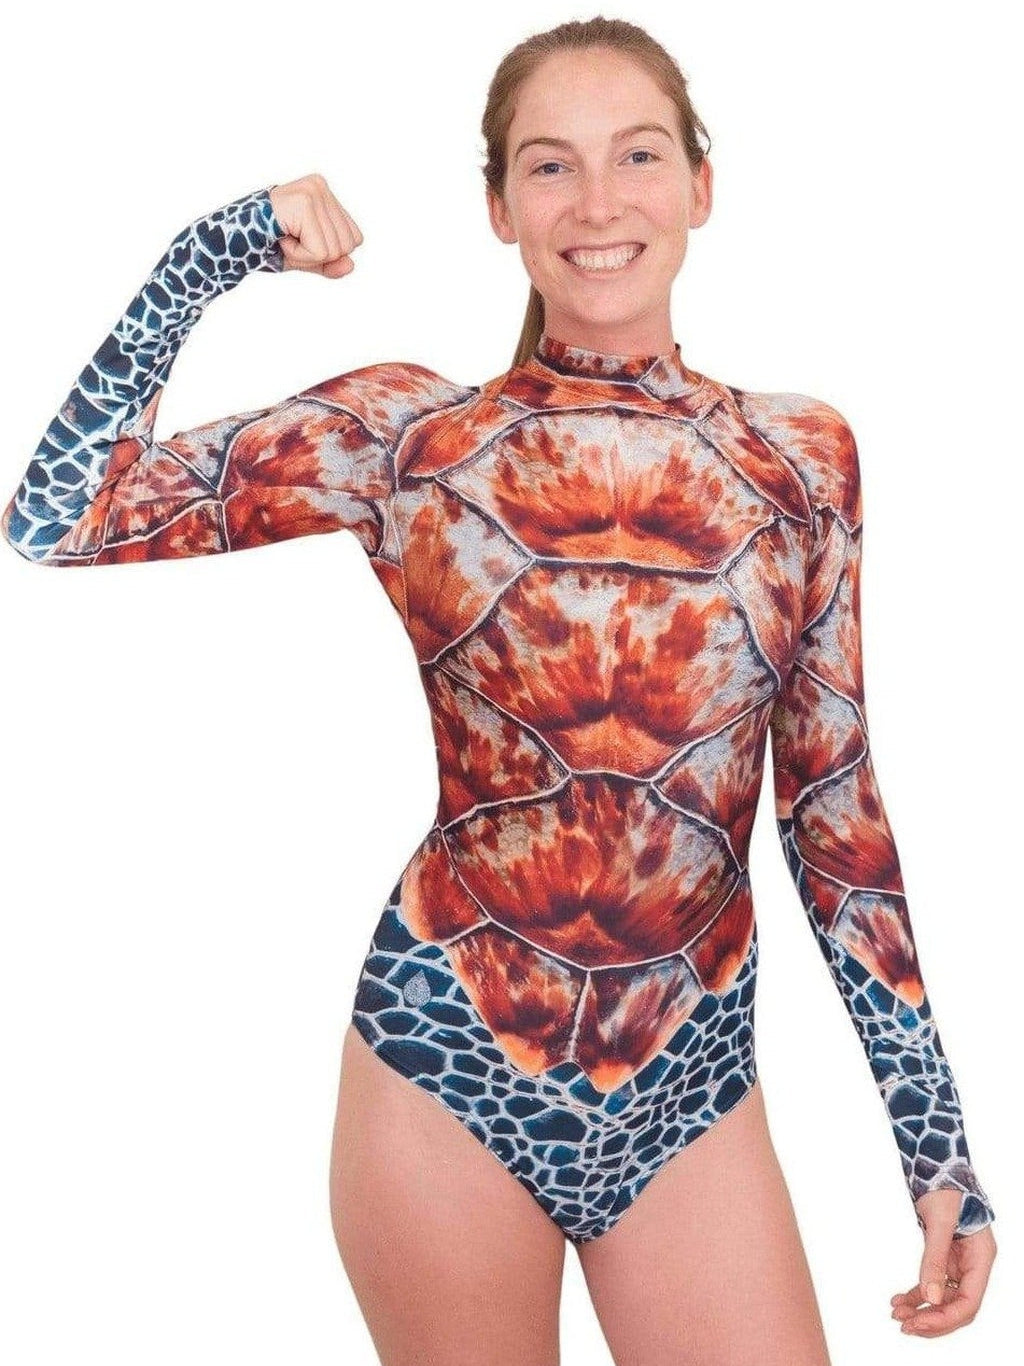 Kids Swimsuit Long Sleeve Diving Suit Swimwear One Piece Full Body